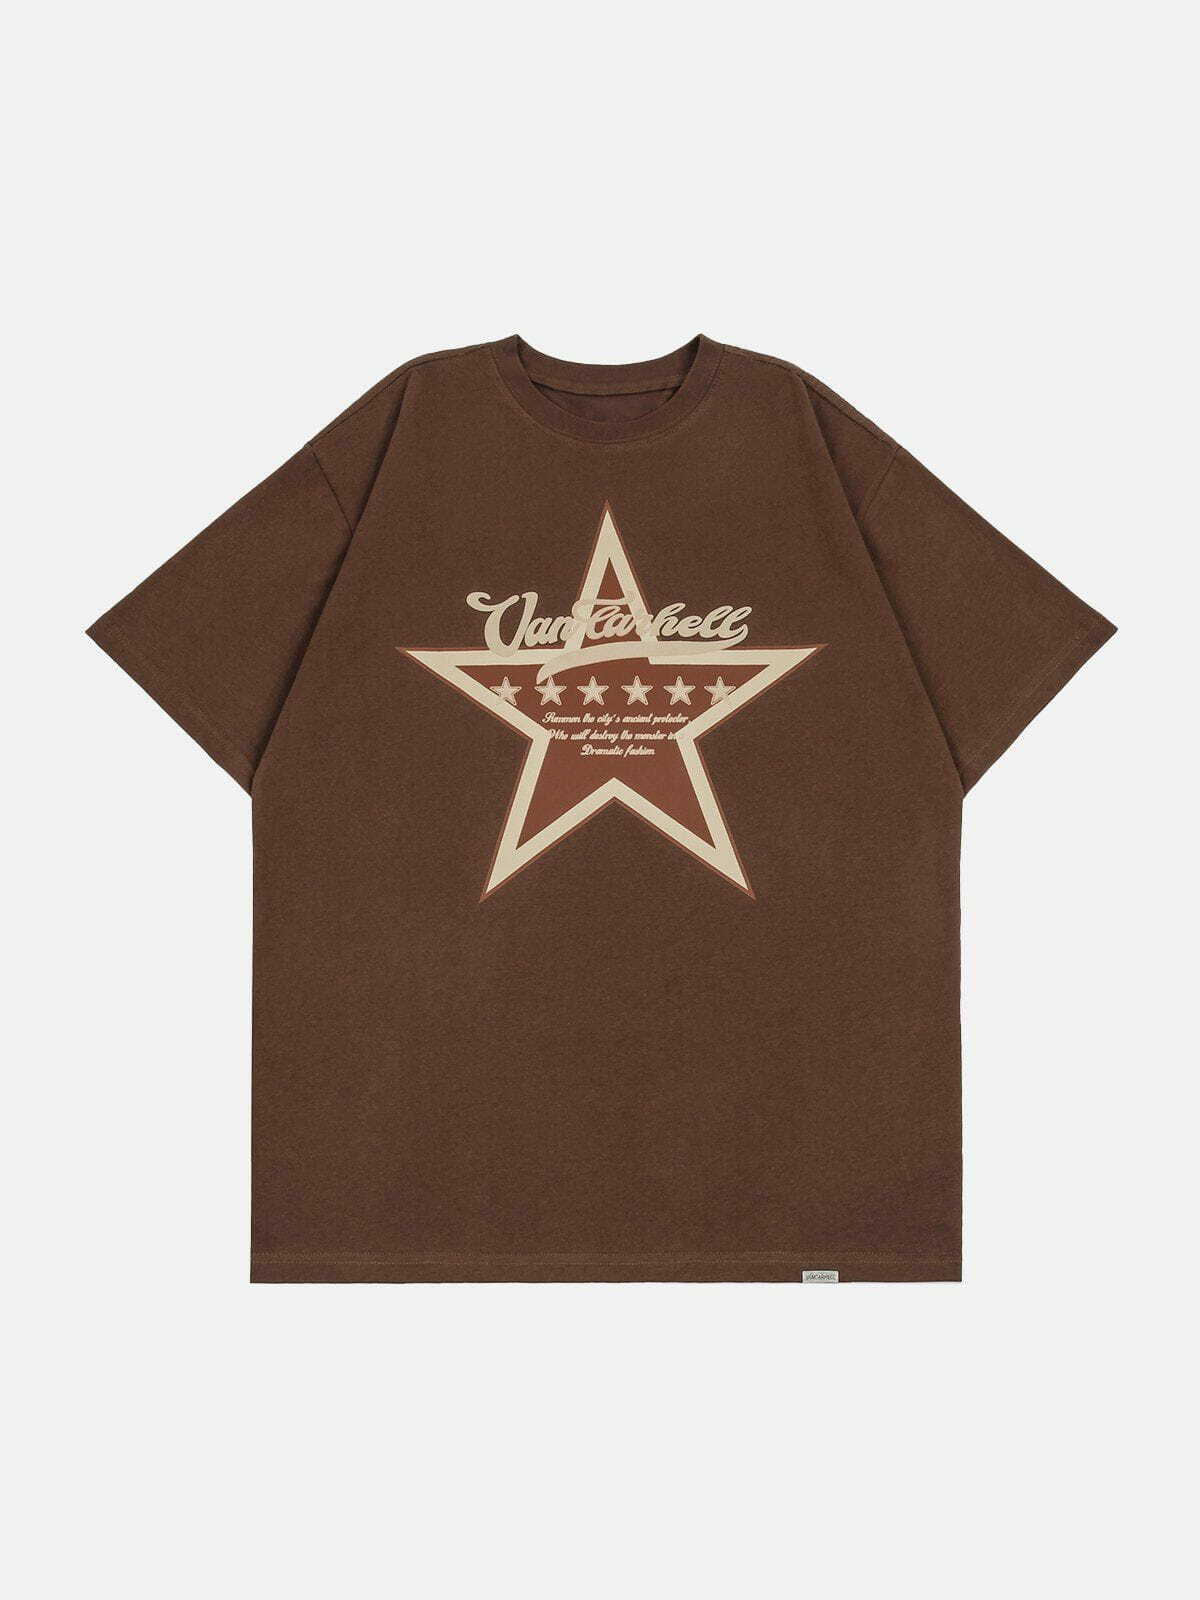 playful star print tee edgy  retro shirt for youthful streetwear 2967